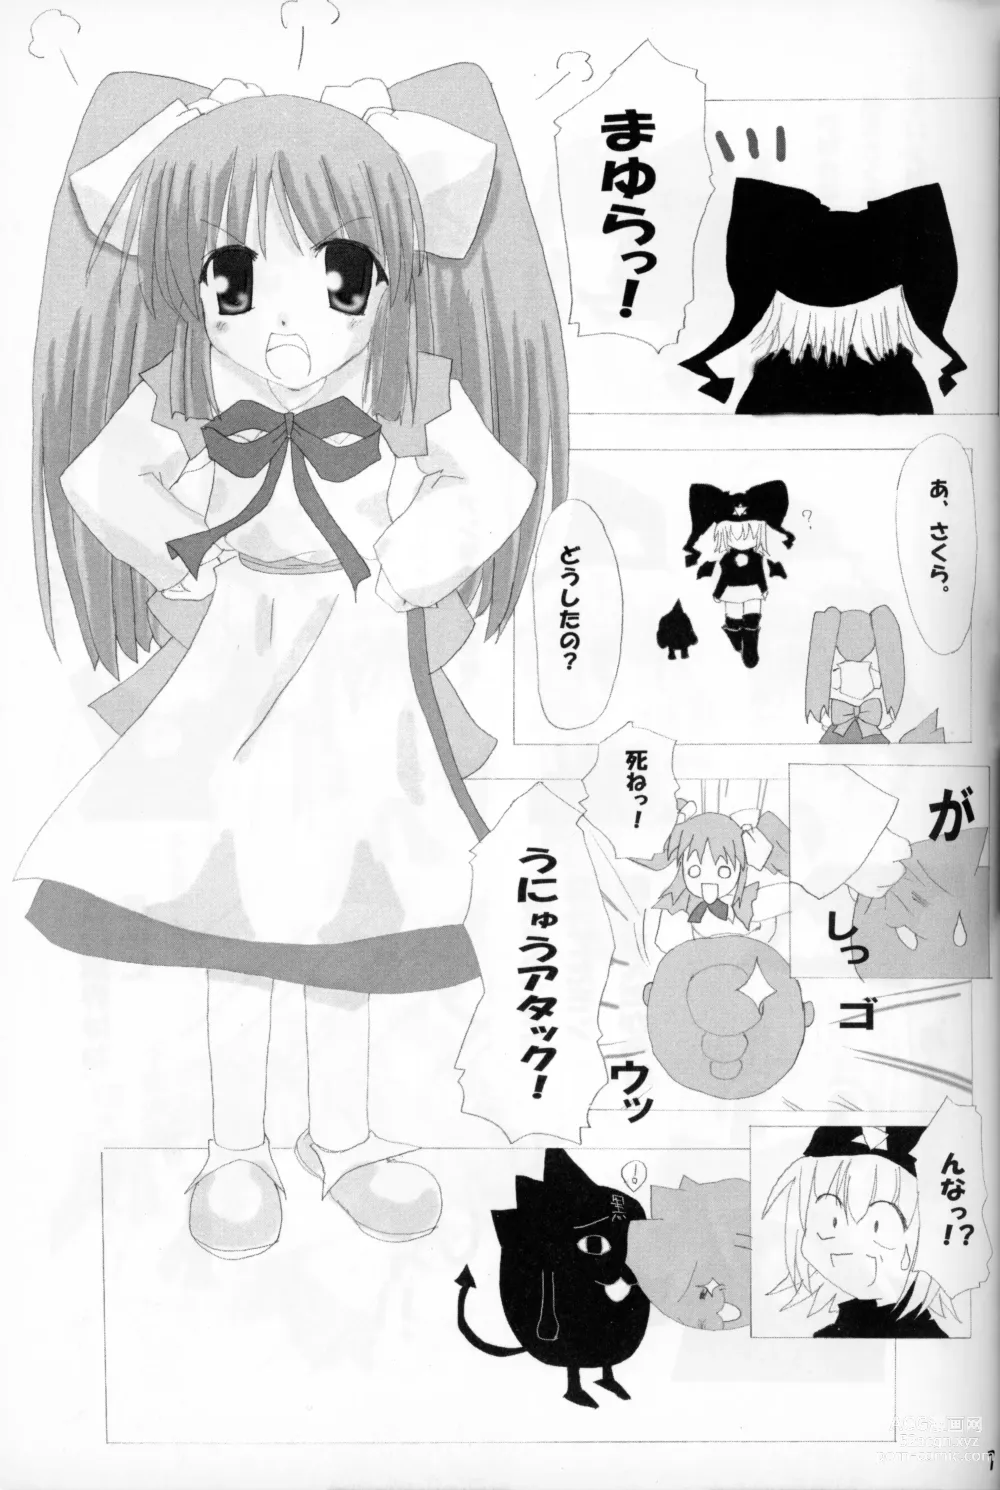 Page 6 of doujinshi Rollin 4